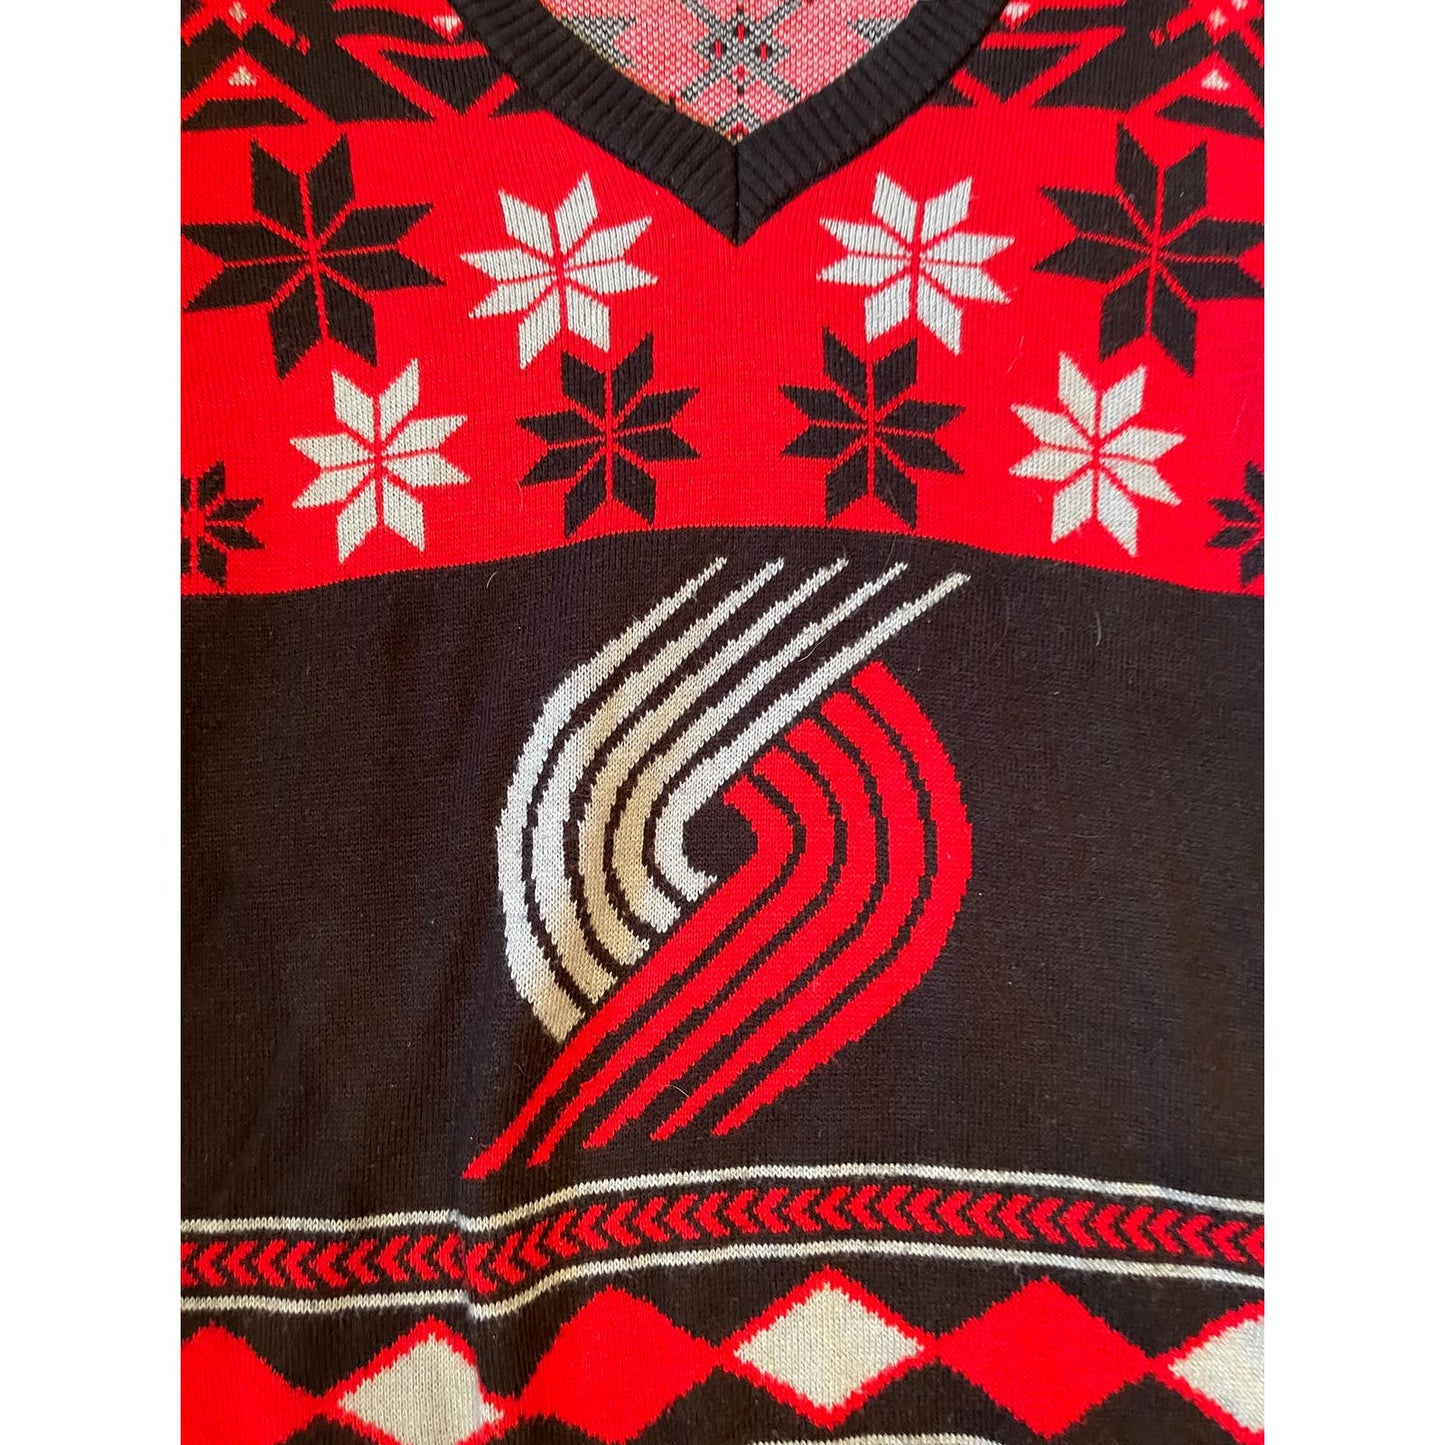 Portland Trail Blazers Ugly Christmas Sweater Men's Size Medium Tight Knit Logo